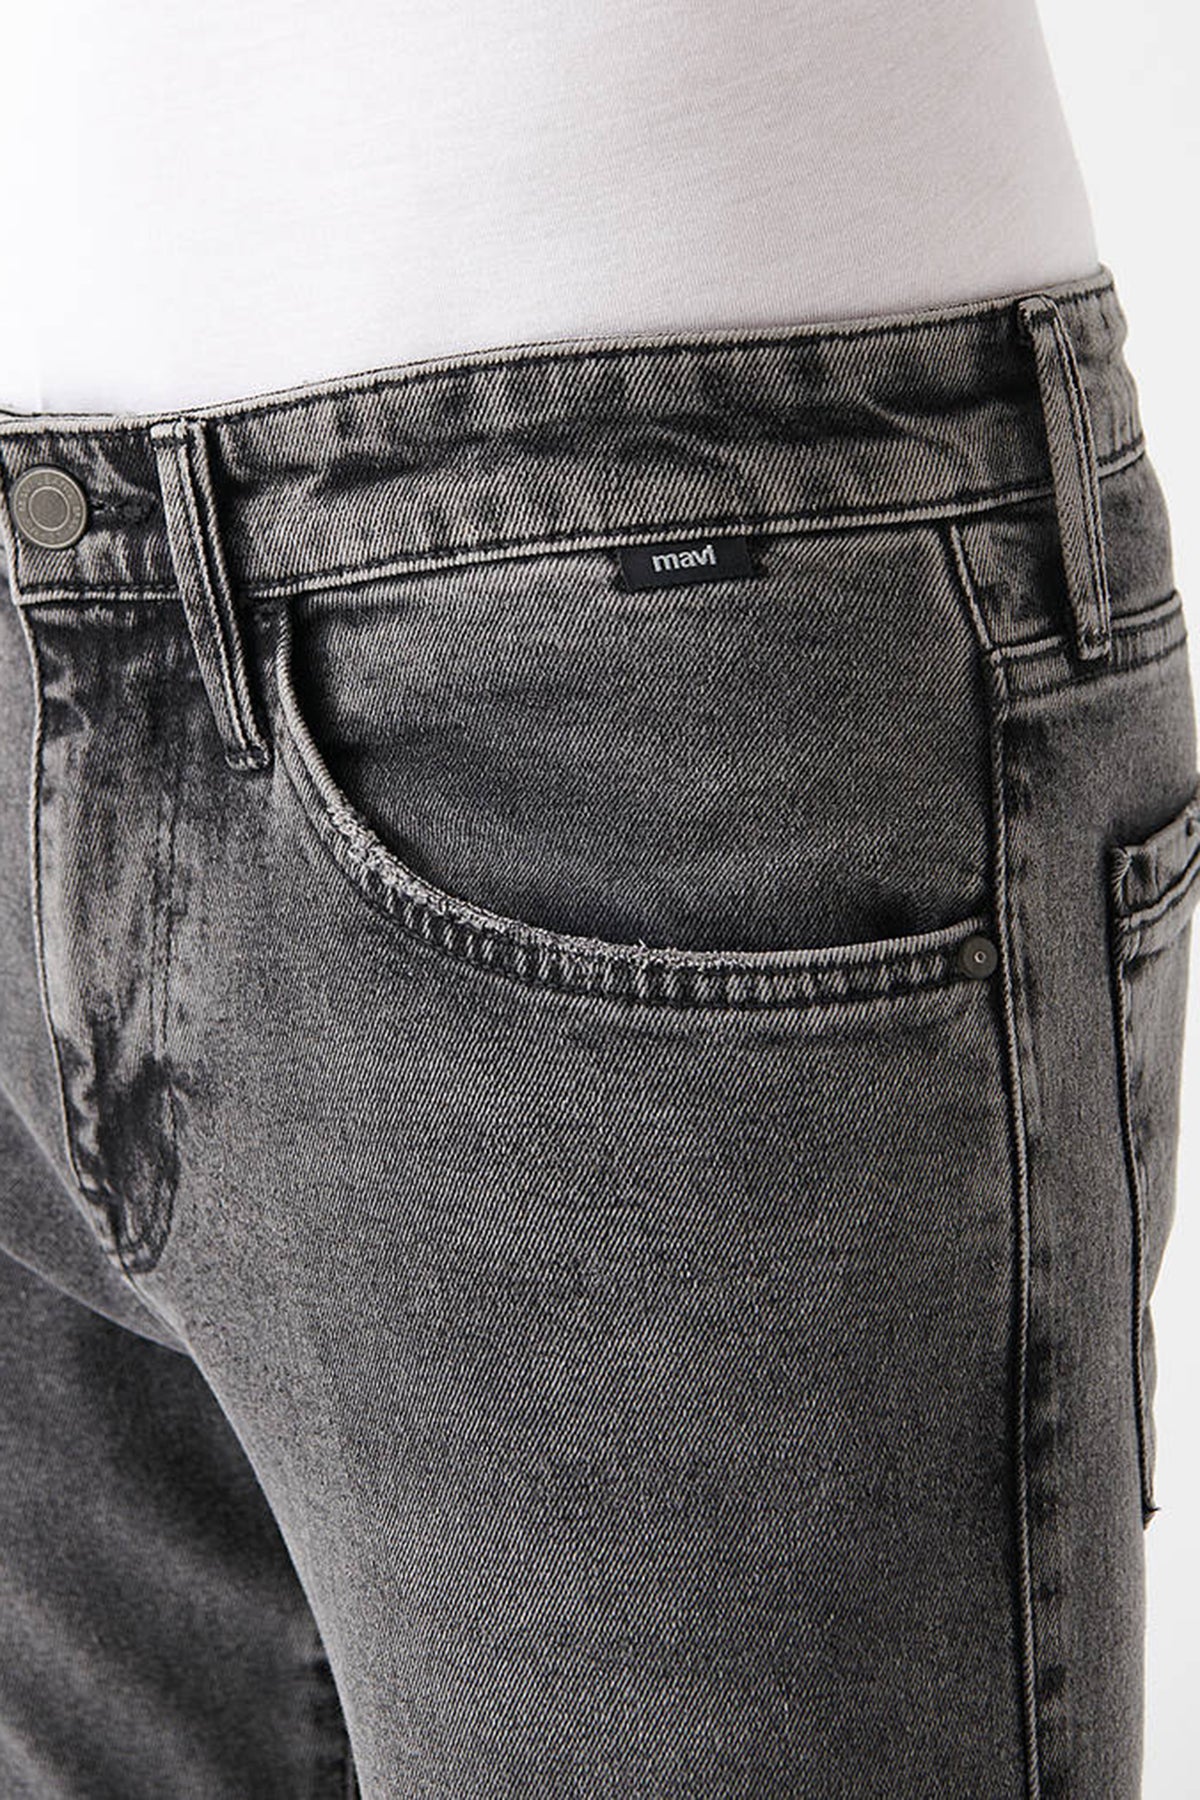 Mavi James Pamuklu Normal Bel Skinny Dar Paça Jeans Erkek Kot Pantolon 0042482164 KOYU GRİ